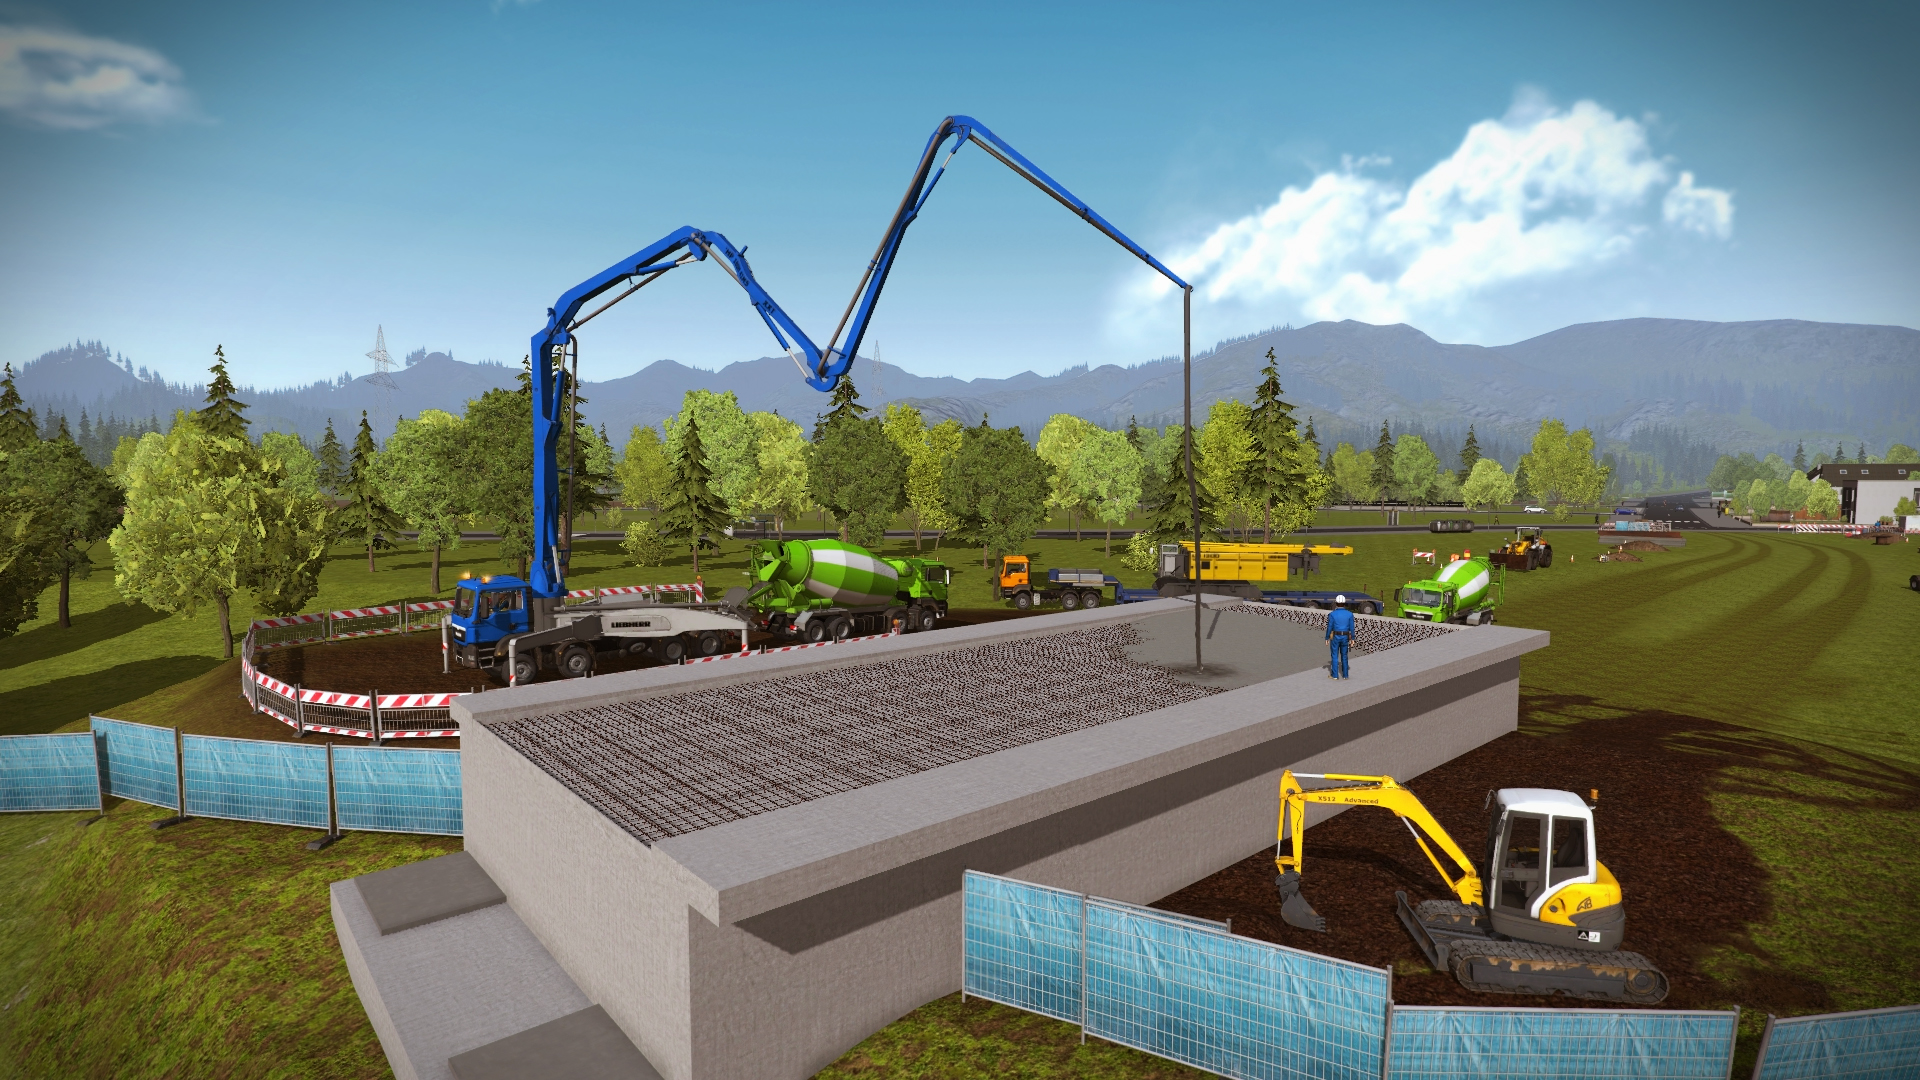 construction simulator 2015 play online